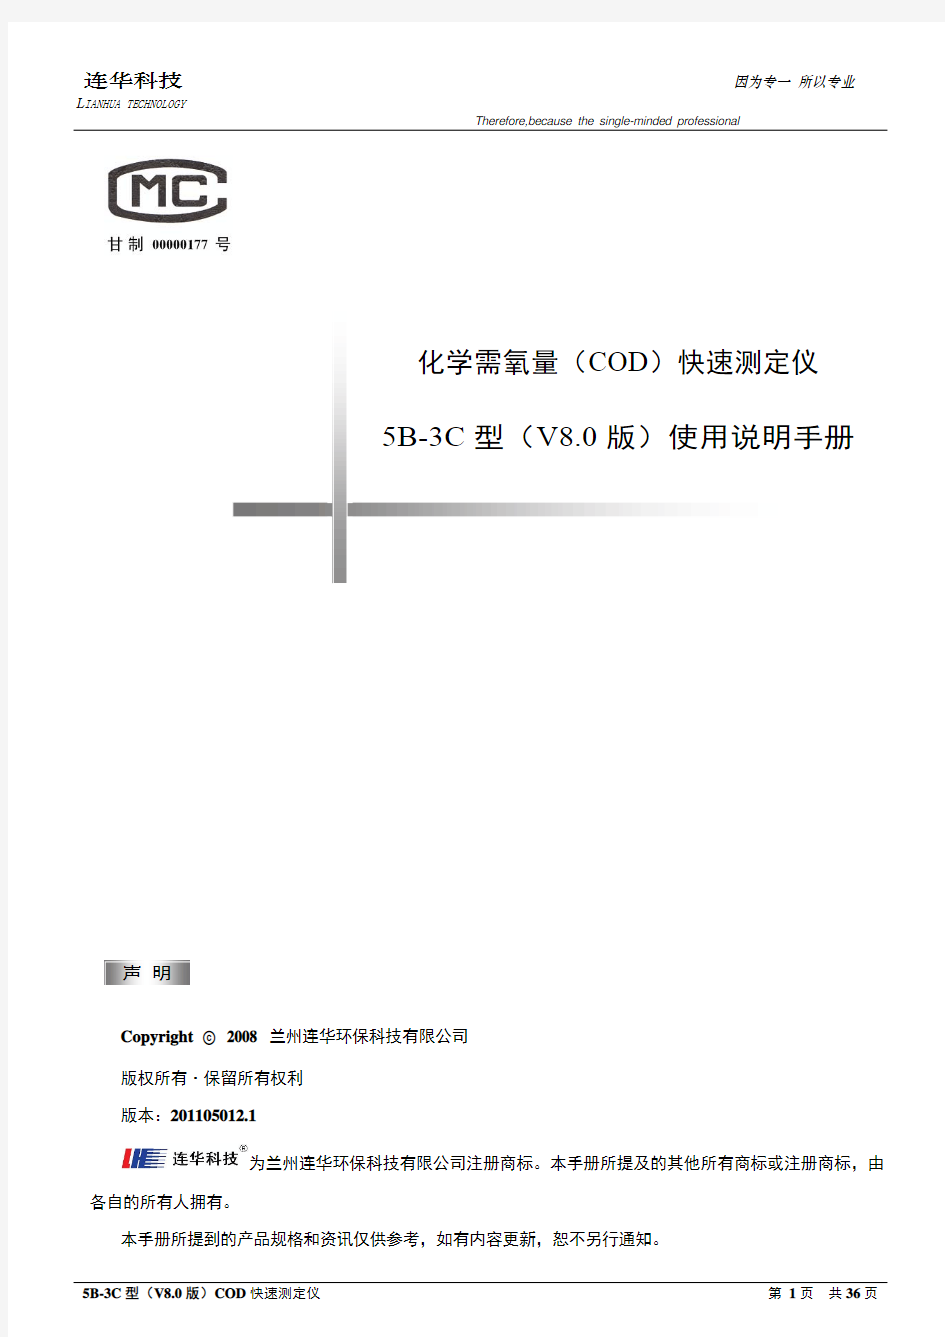 5B-3C(V8.0)型COD快速测定仪说明书